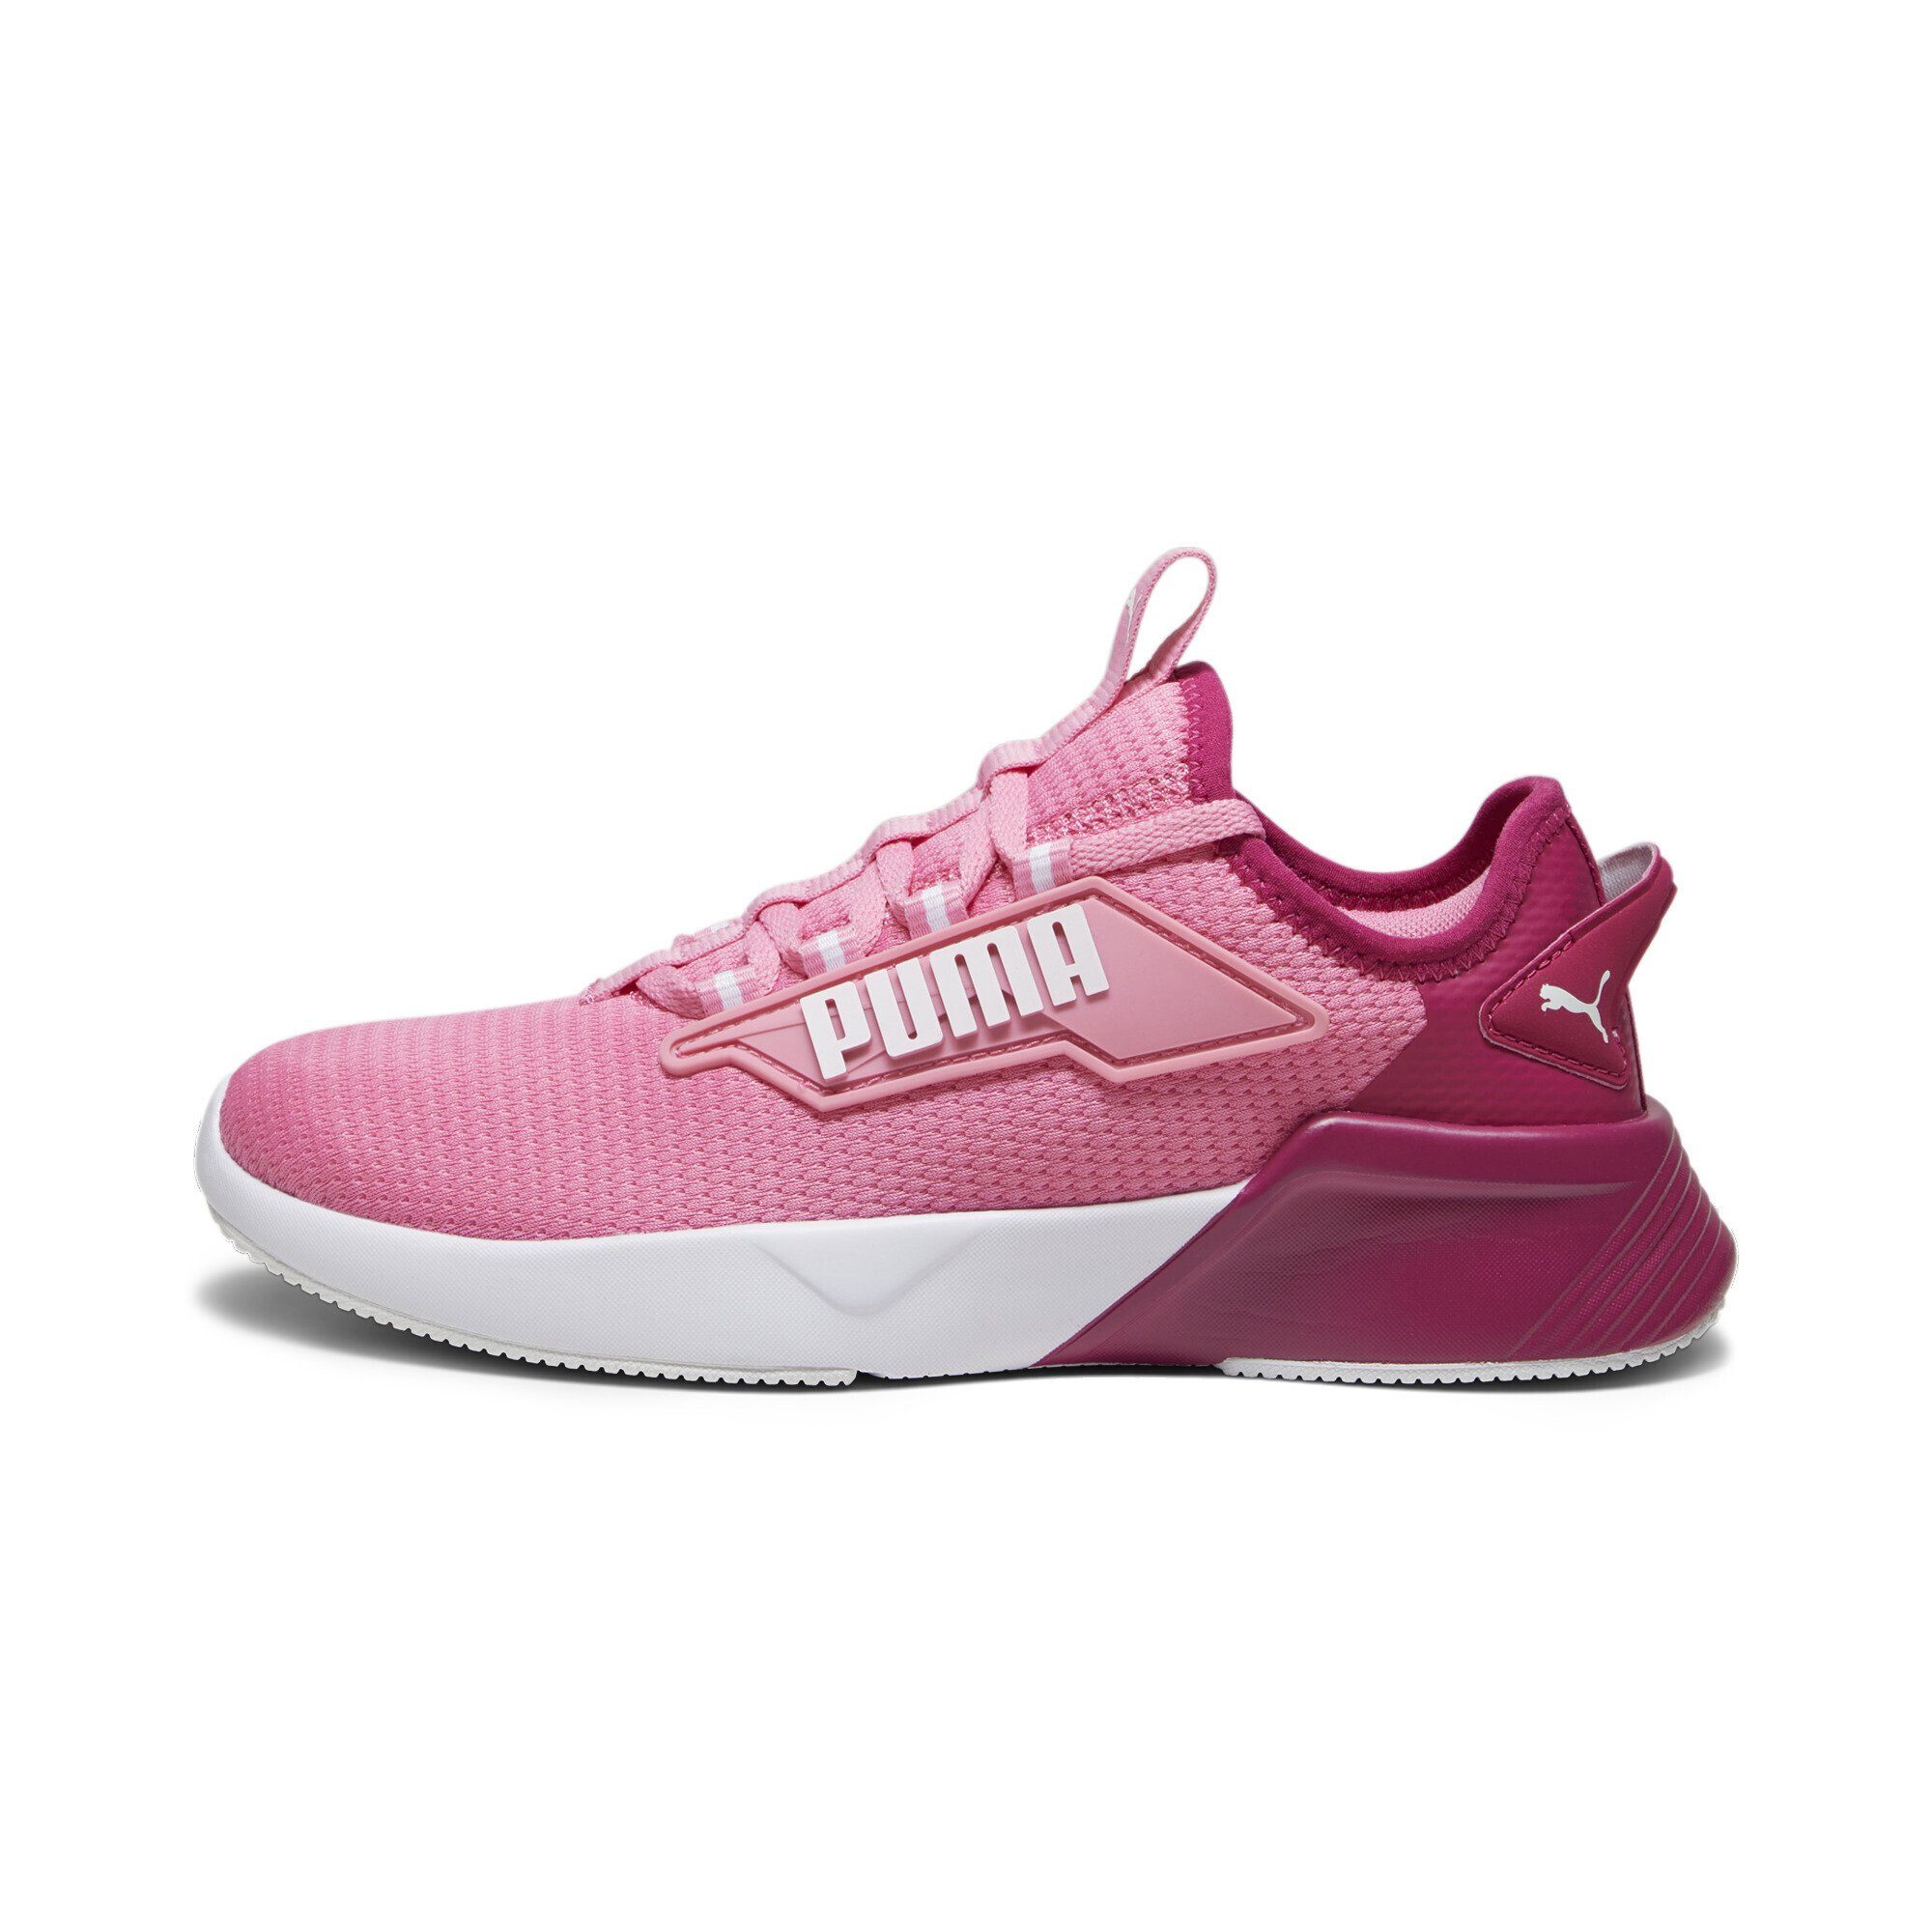 Burst Jugendliche Pinktastic 2 PUMA Laufschuh Pink Retaliate White Strawberry Sneakers